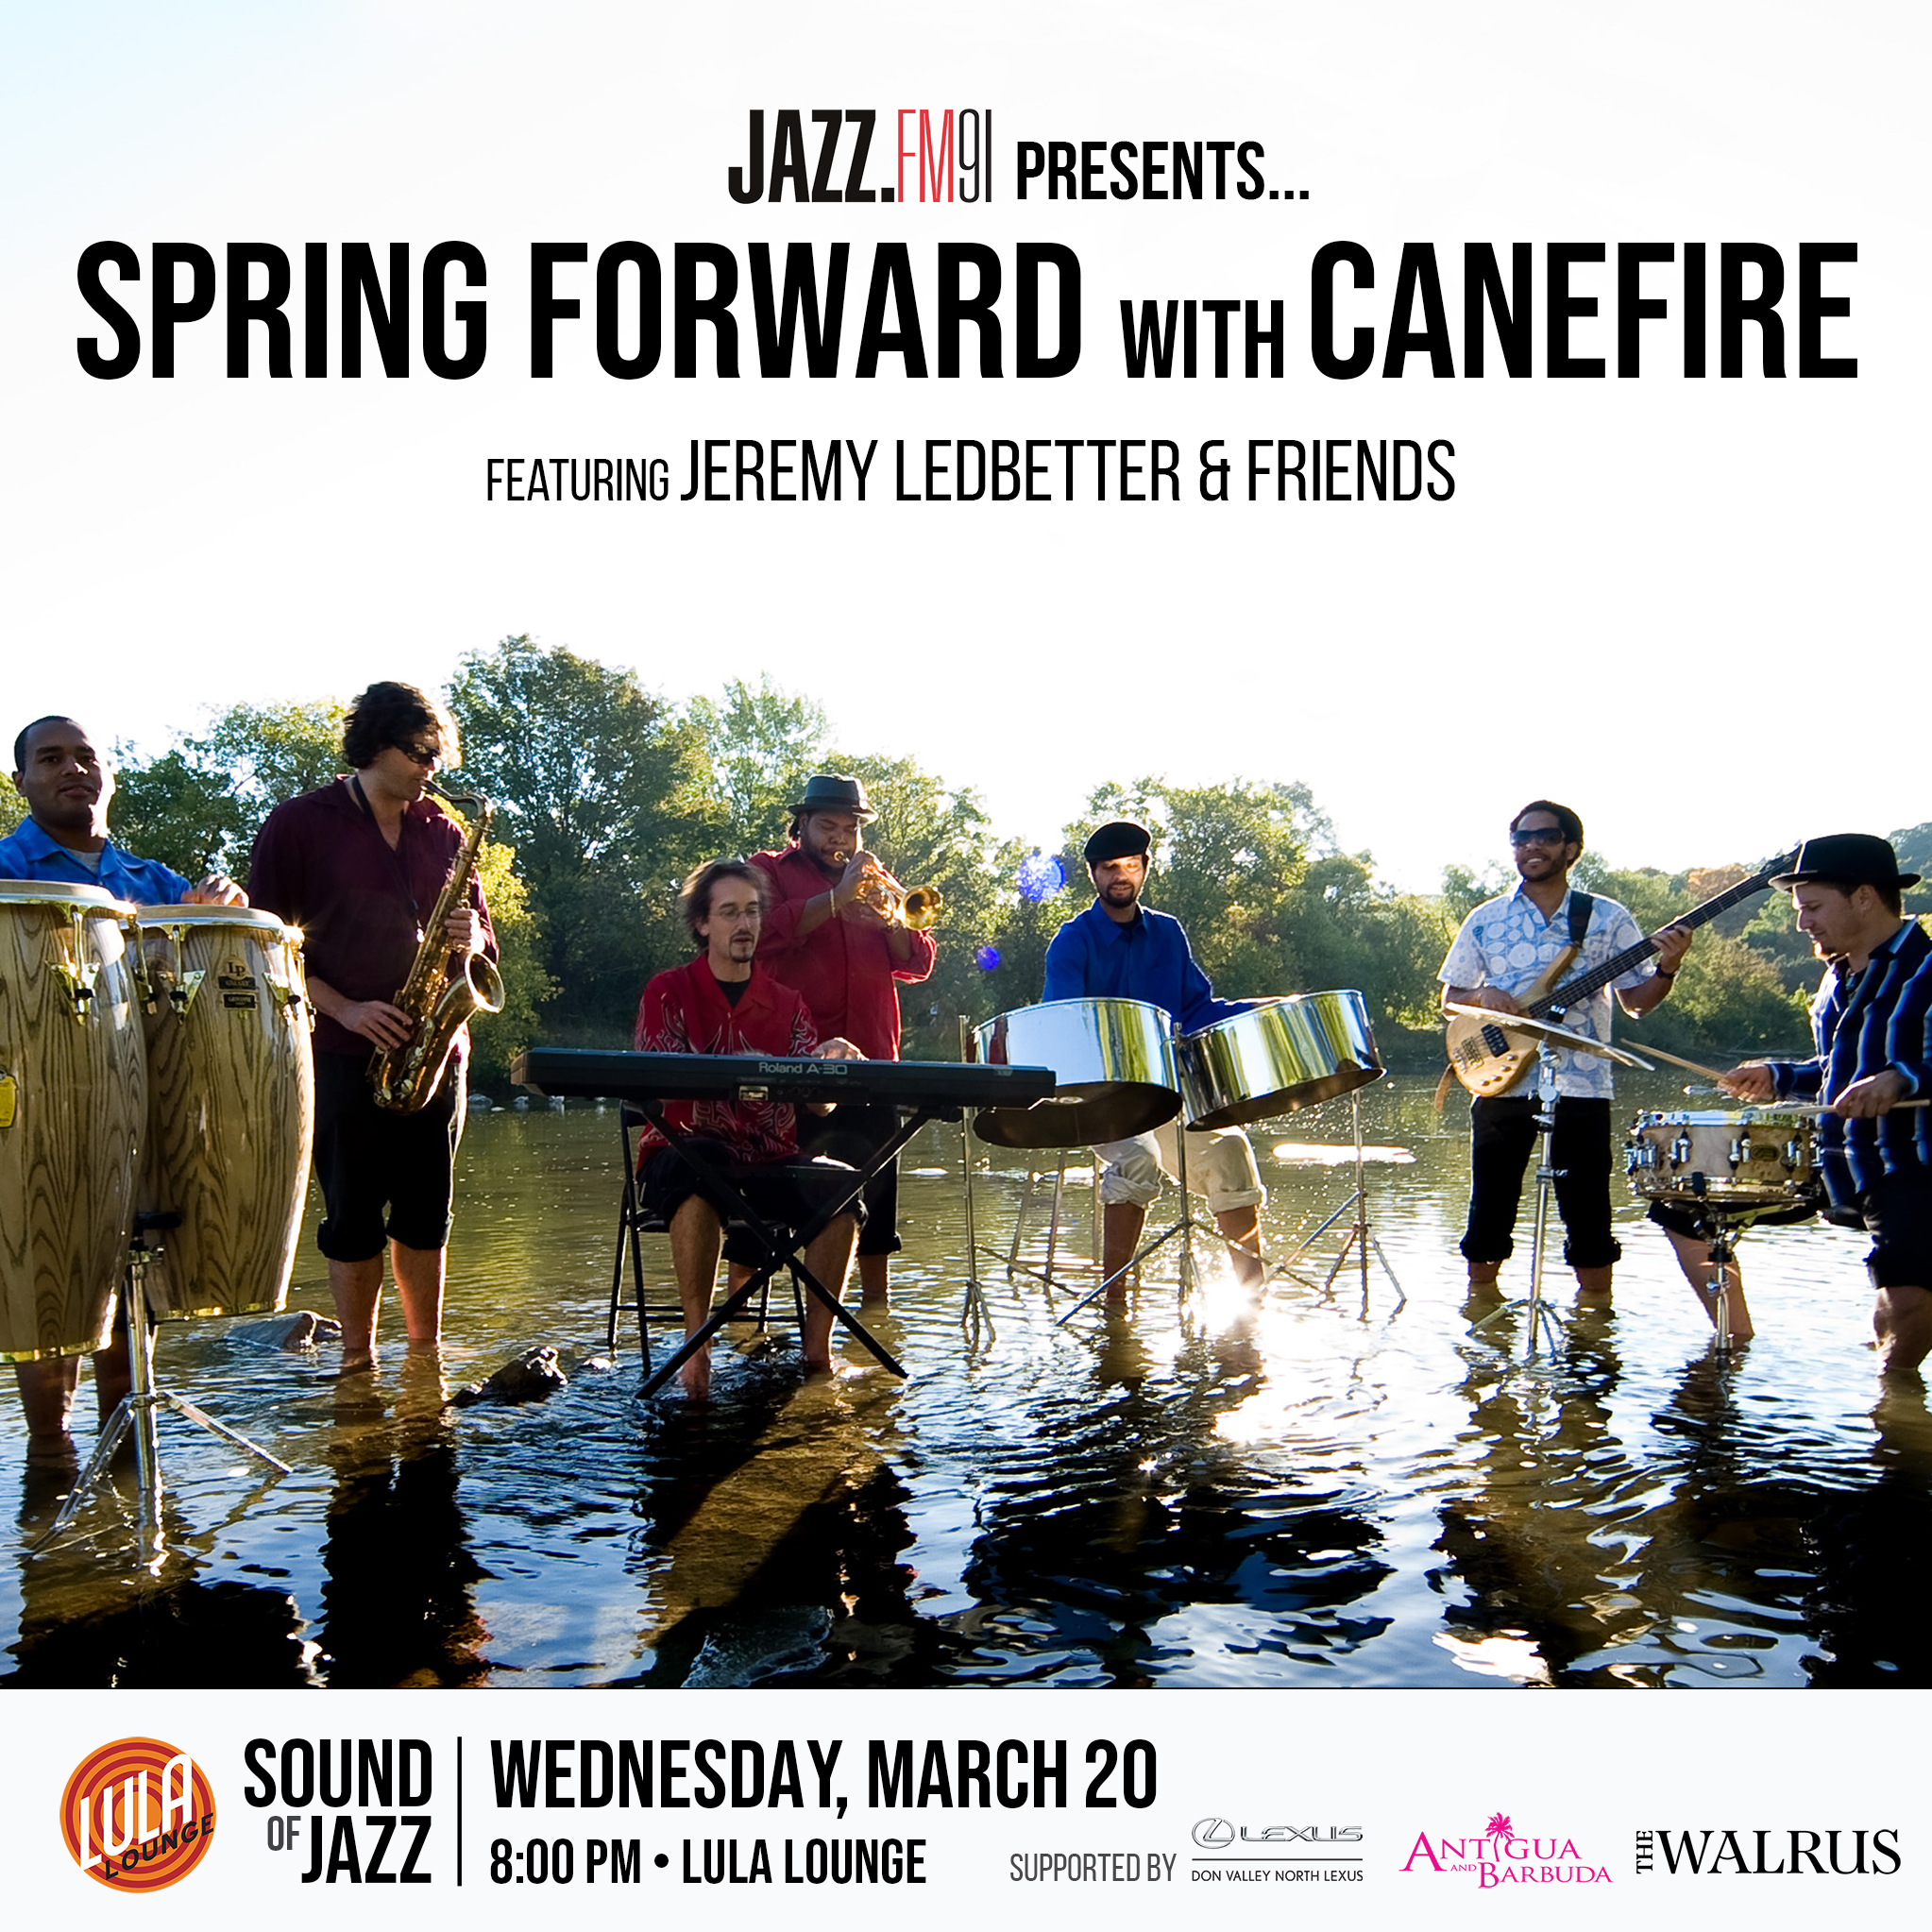 JAZZ.FM91 presents… Sound of Jazz: Spring Forward with CaneFire